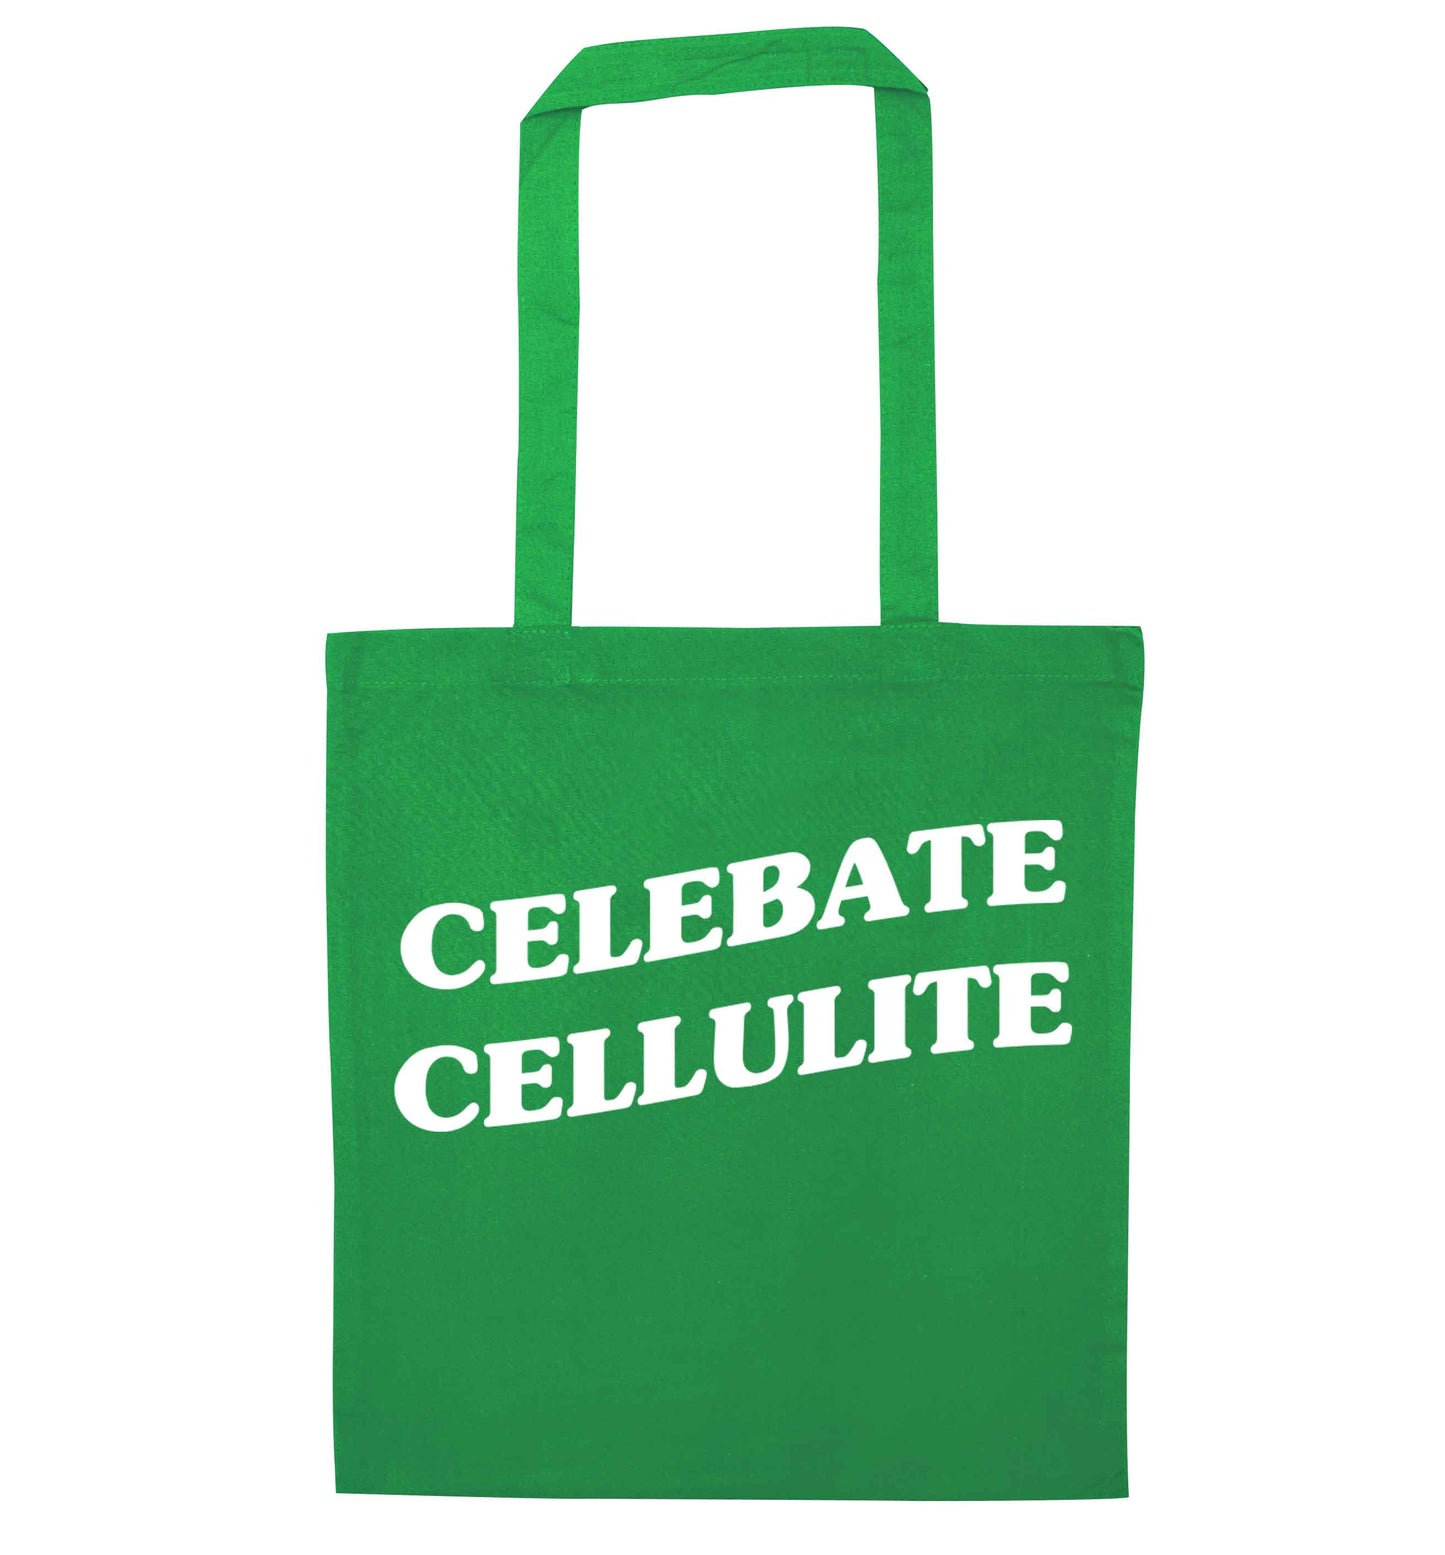 Celebrate cellulite green tote bag